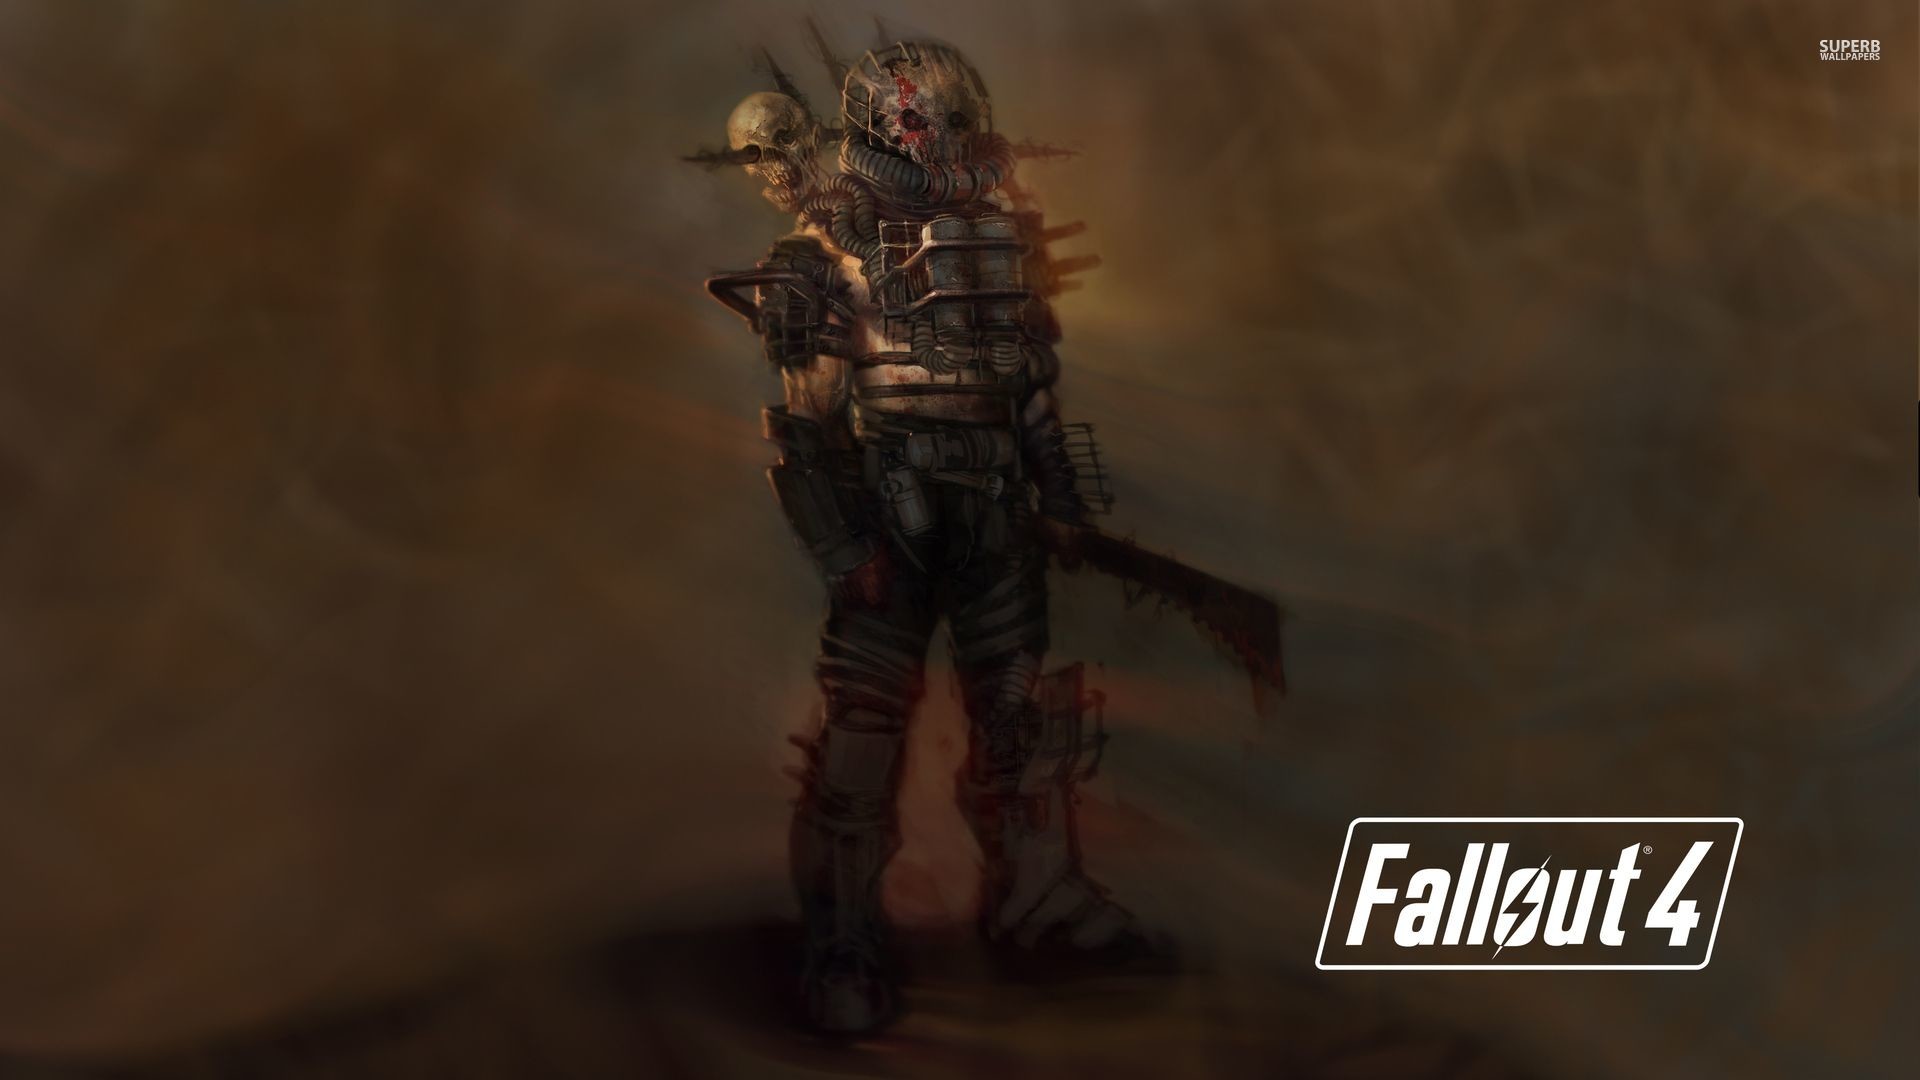 1920x1080 Fallout 4 raider holding a machete wallpaper - Game wallpapers .